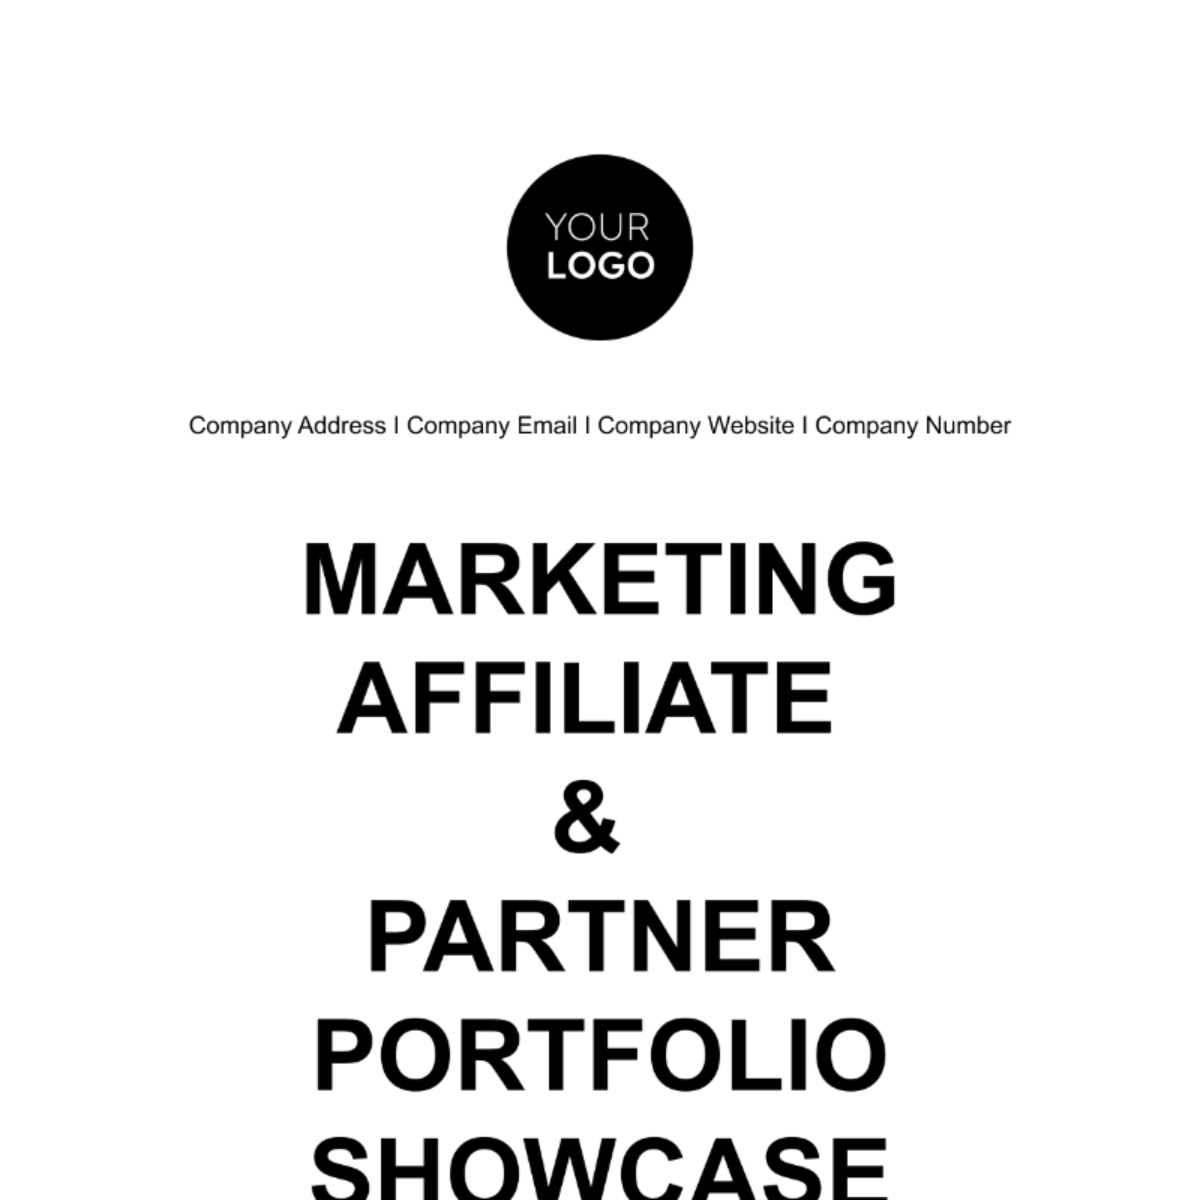 Free Marketing Affiliate & Partner Portfolio Showcase Template